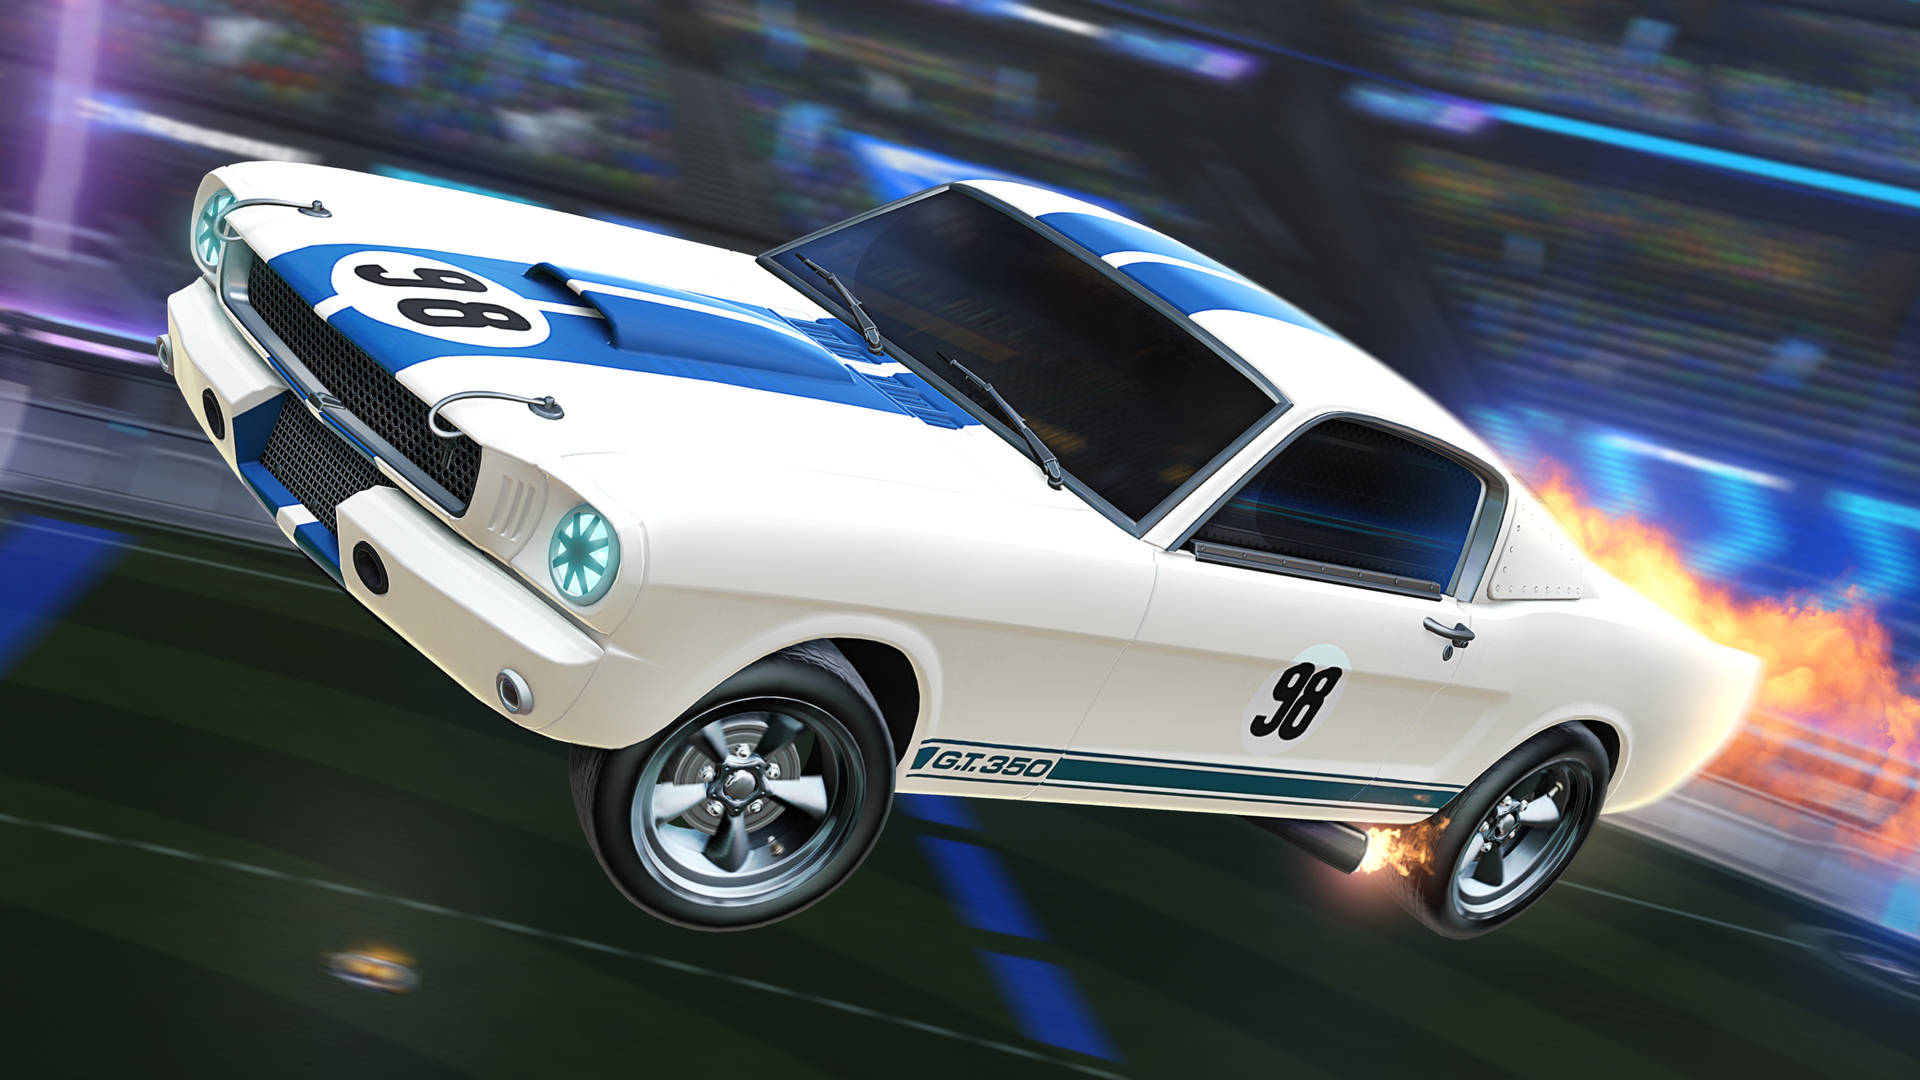 Mustang Shelby Rocket League Car 2K Wallpaper